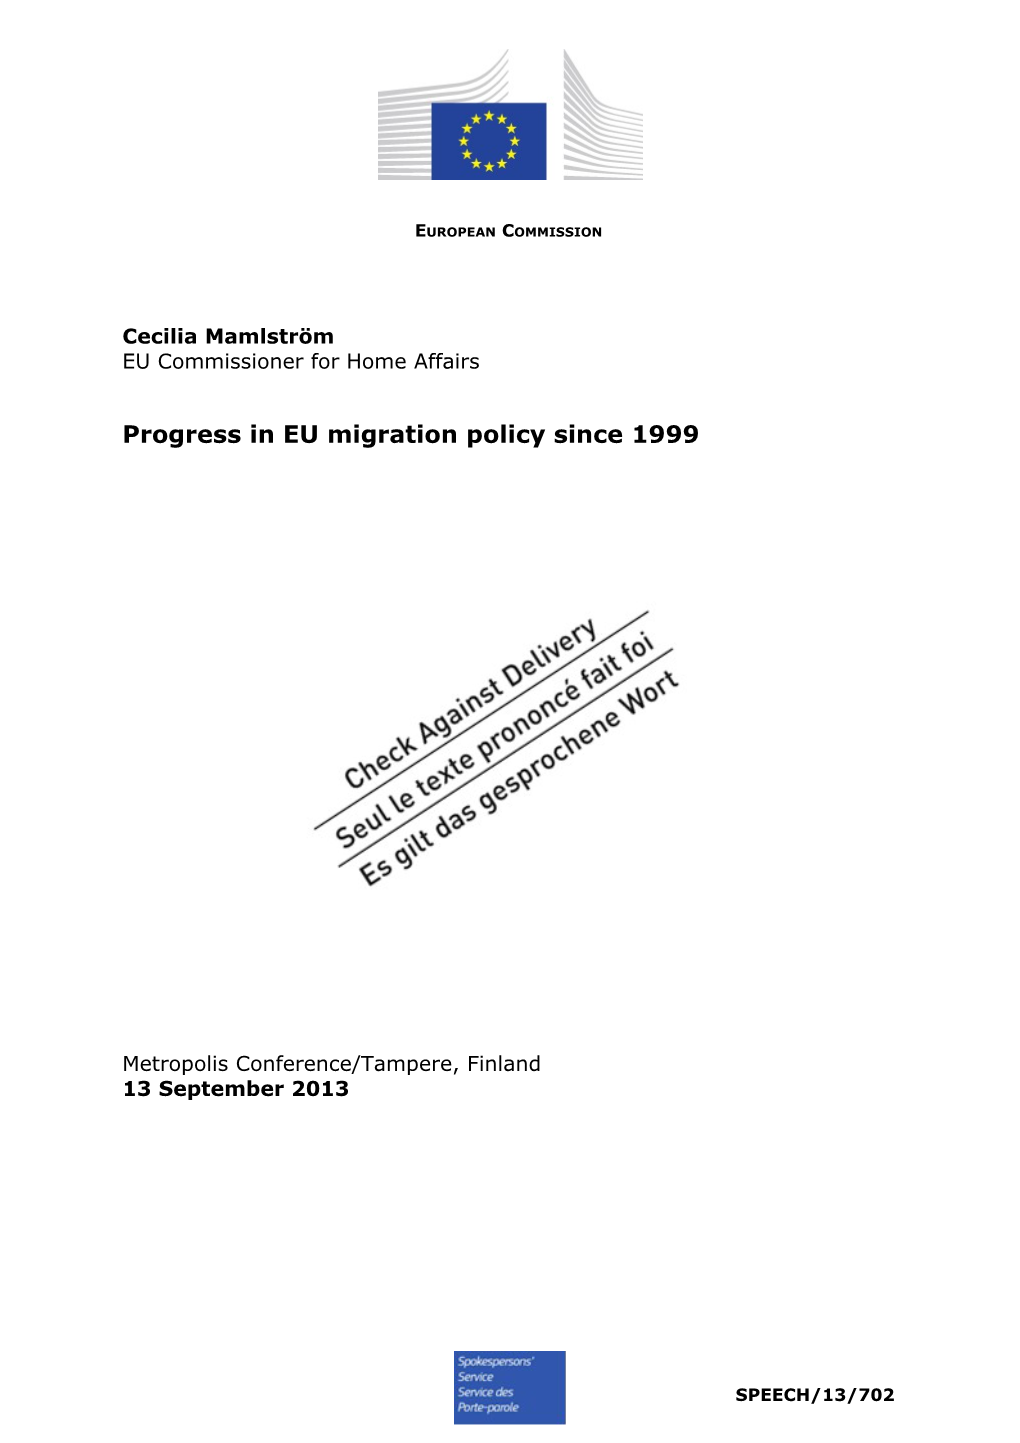 Progress in EU Migration Policy Since 1999